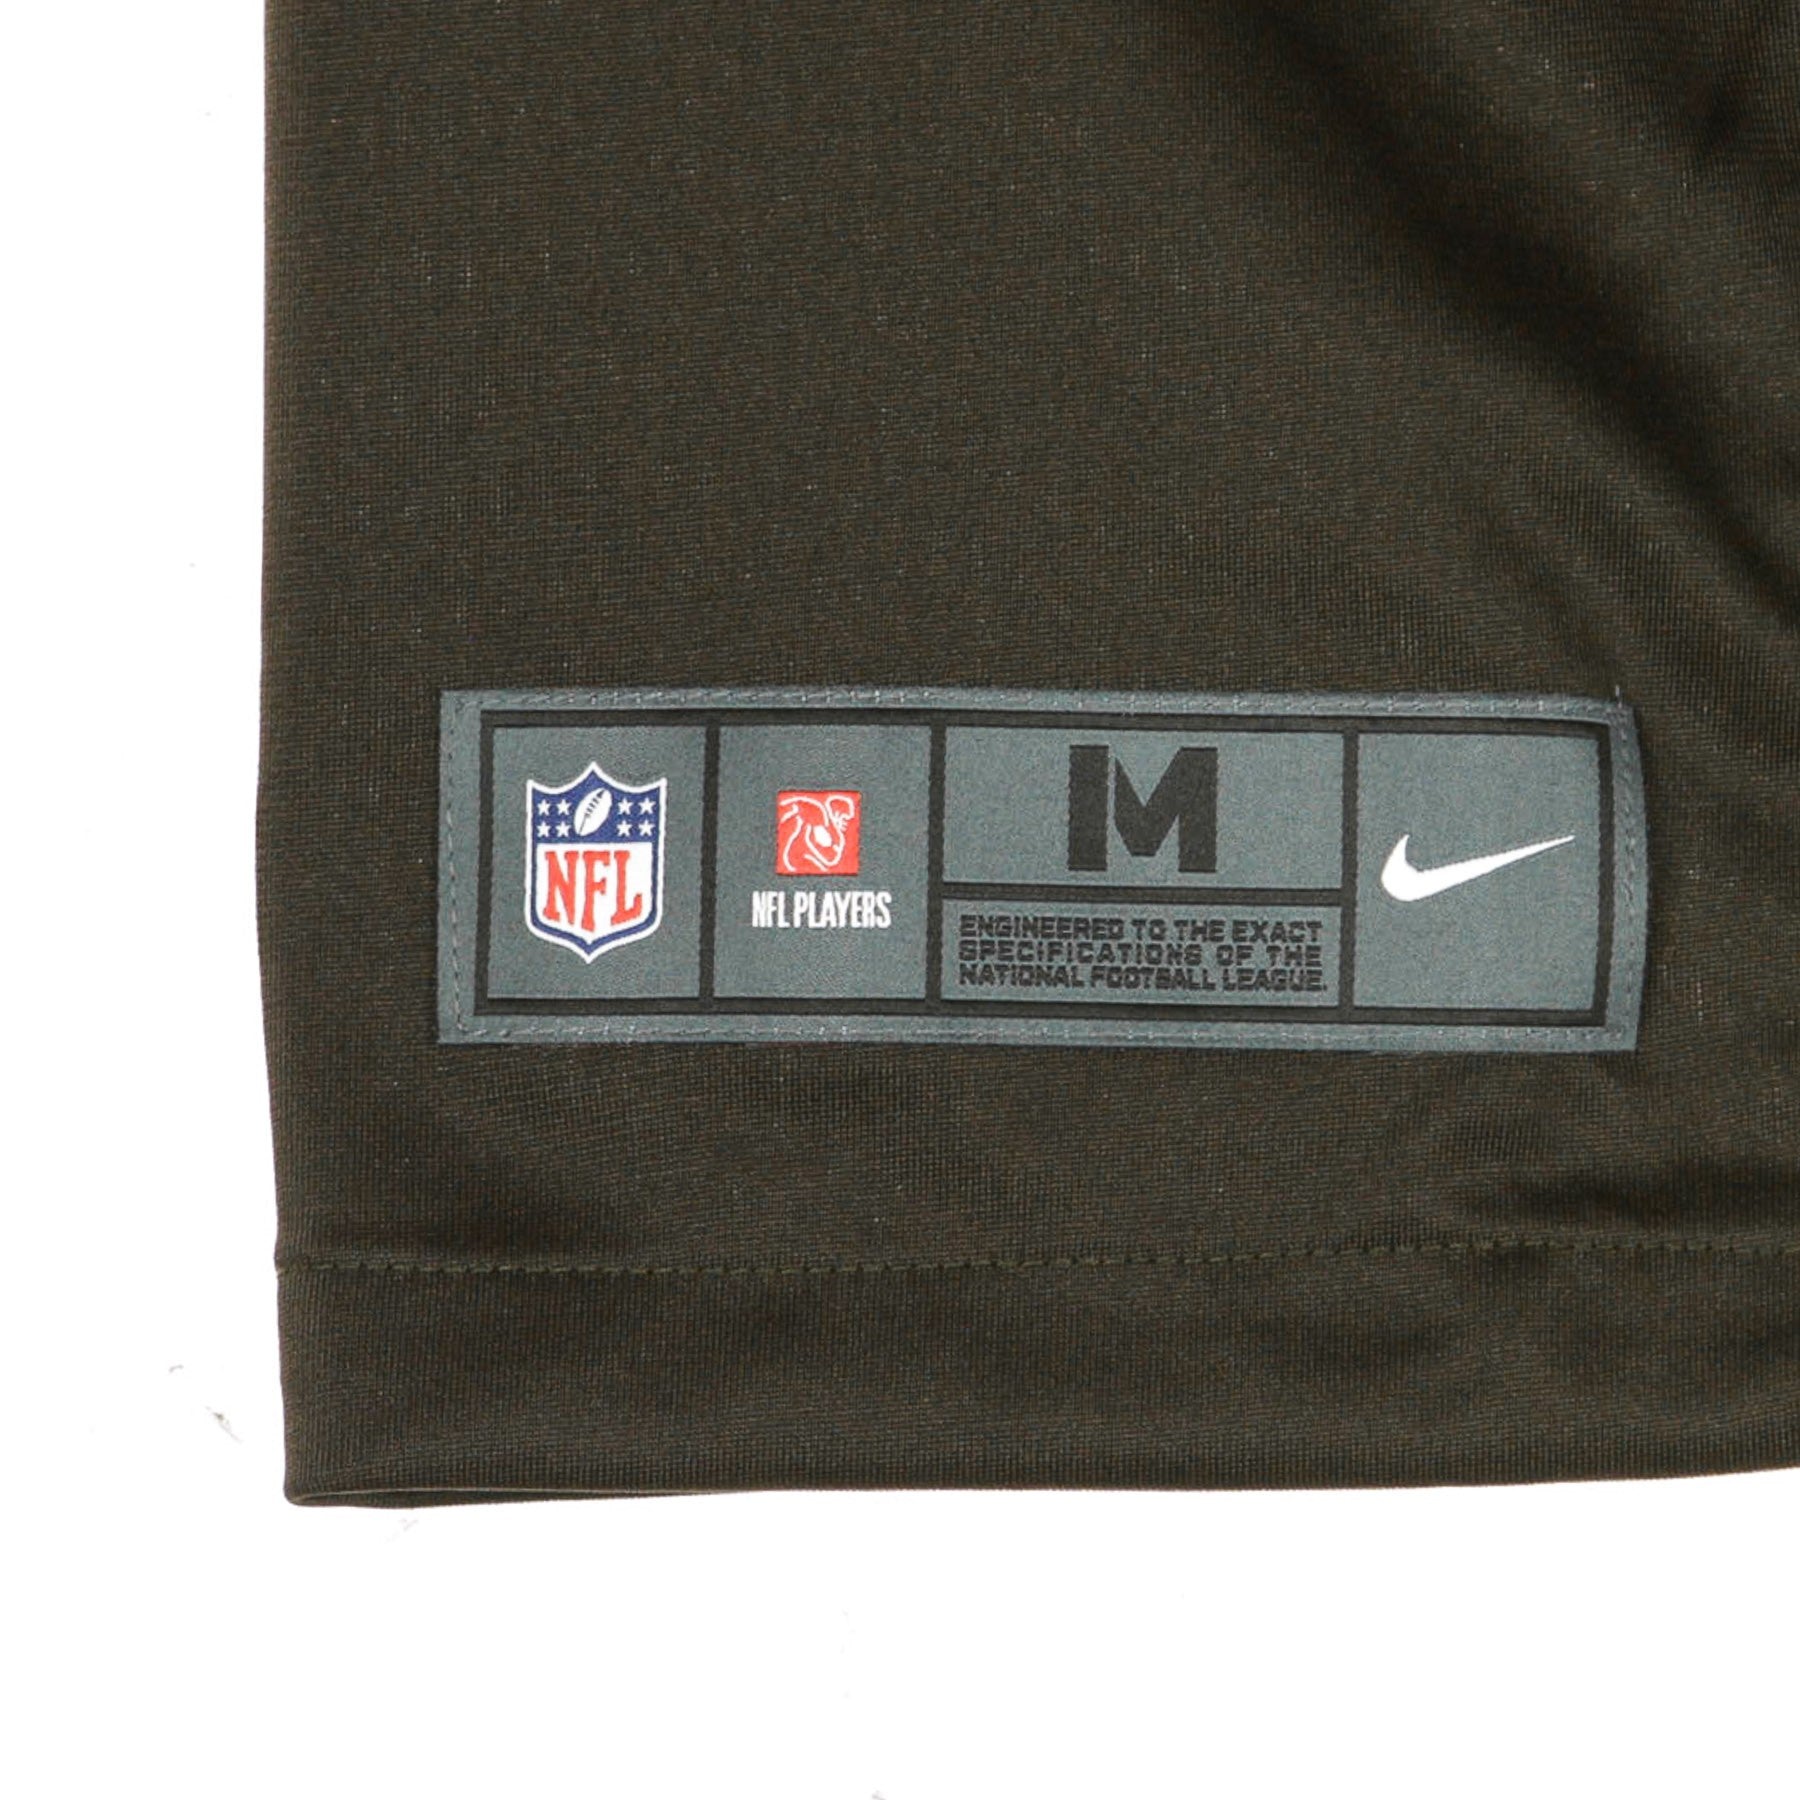 American Football Jacket Men's NFL Game Team Color Jersey No.13 Beckham Jr Clebro Original Team Colors